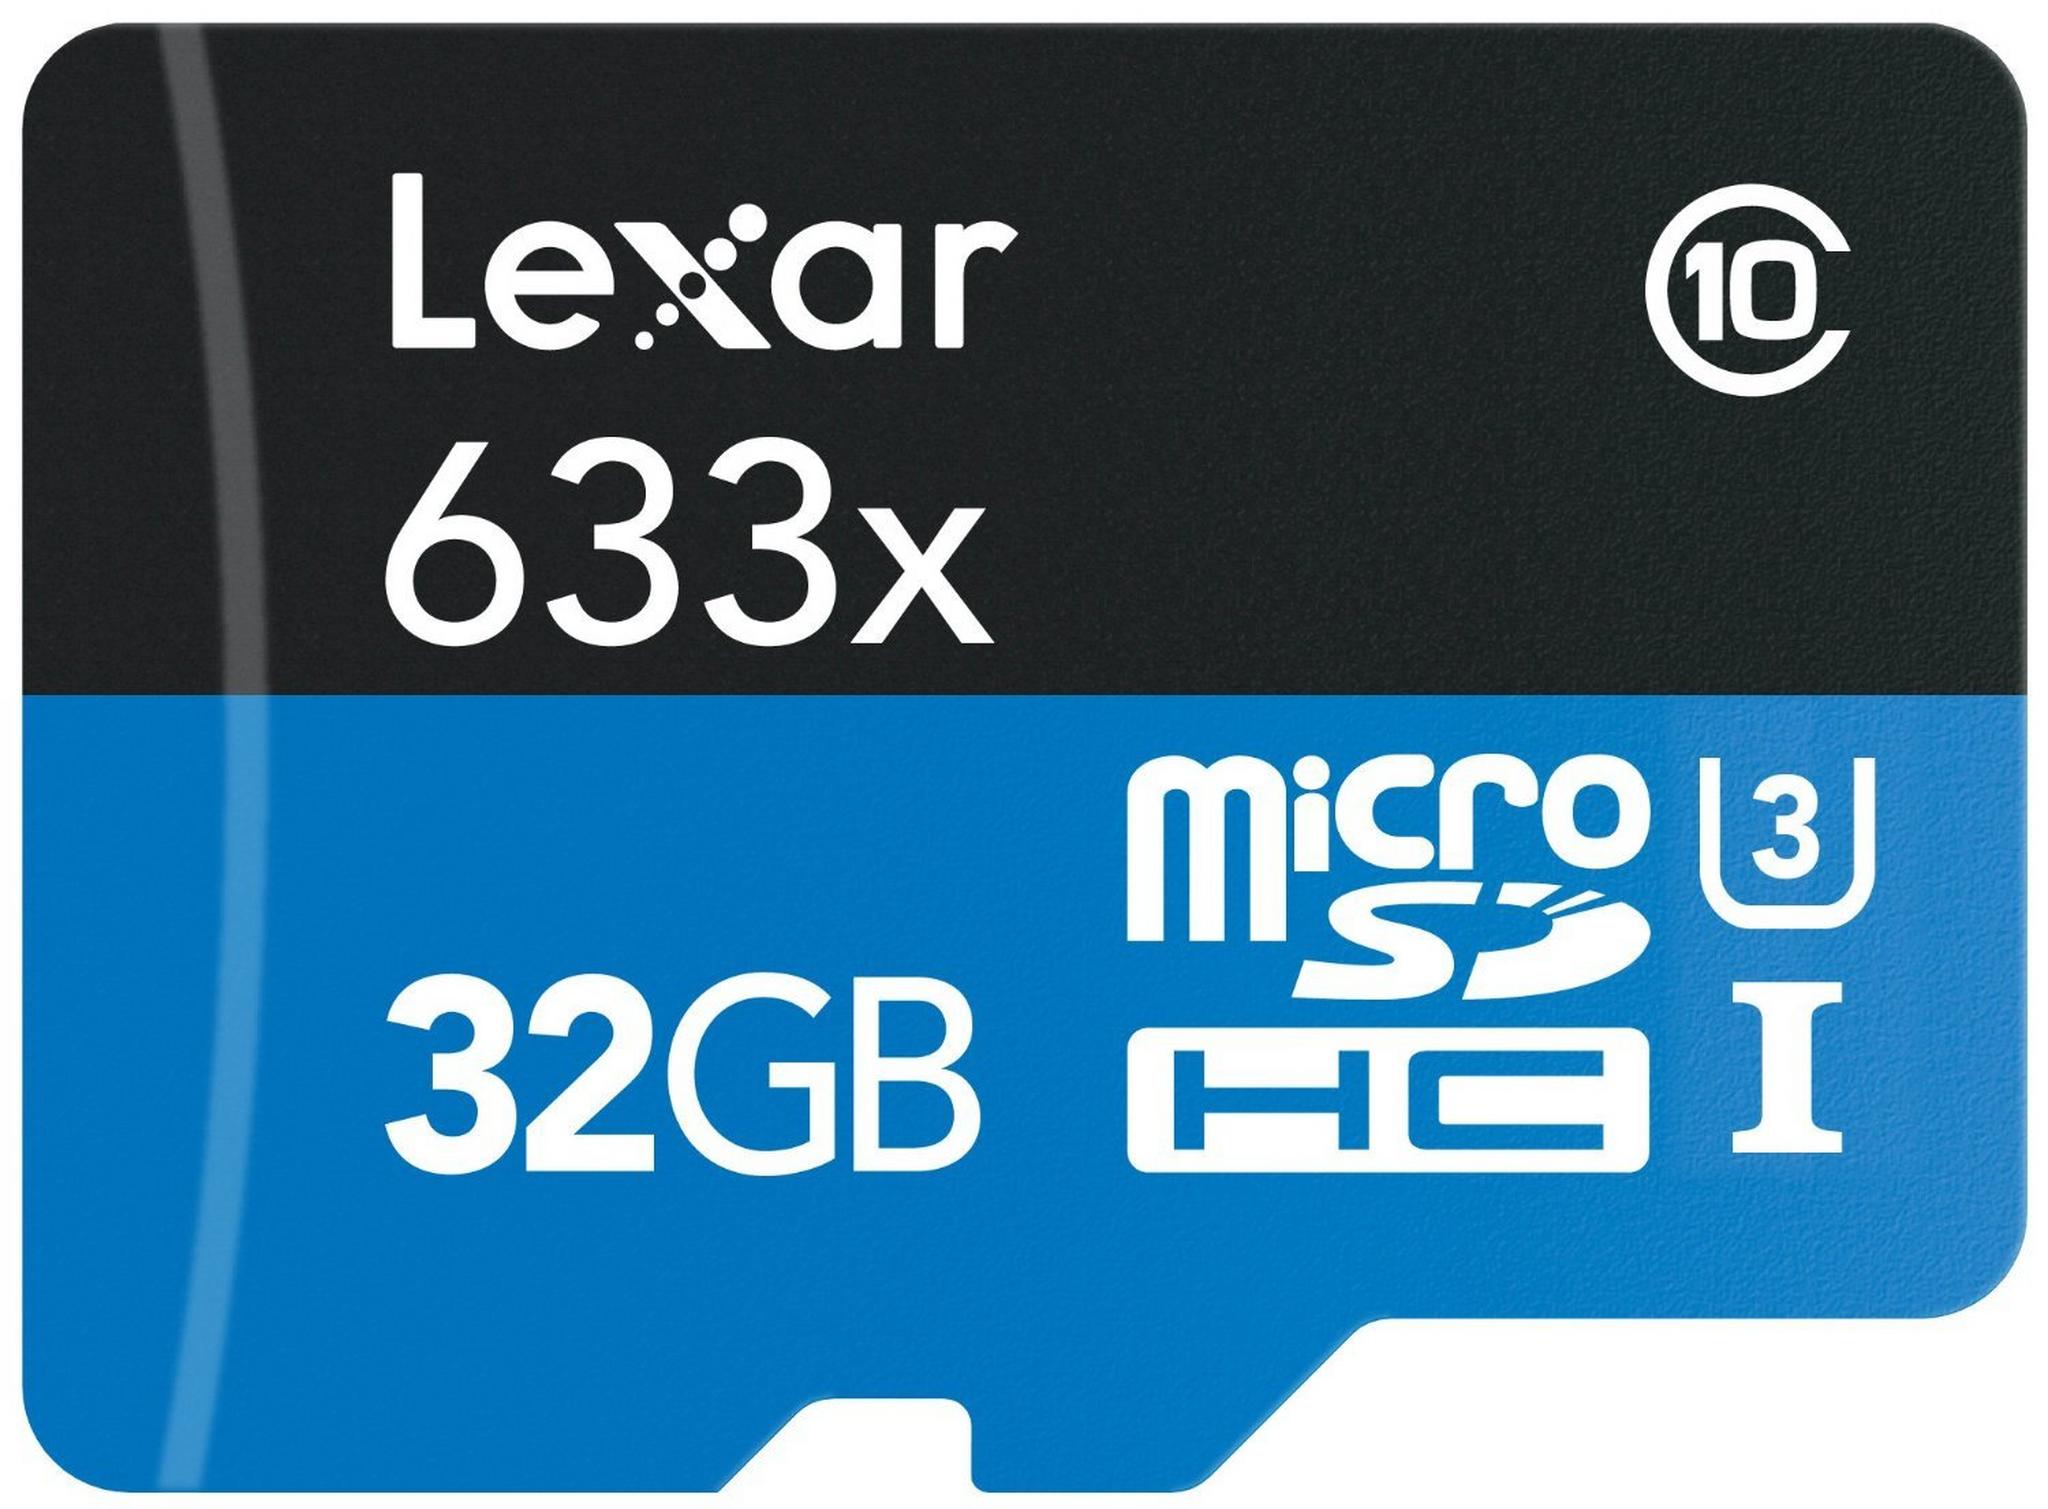 Lexar 32GB MicroSDHC UHS-I Class 10 Memory Card